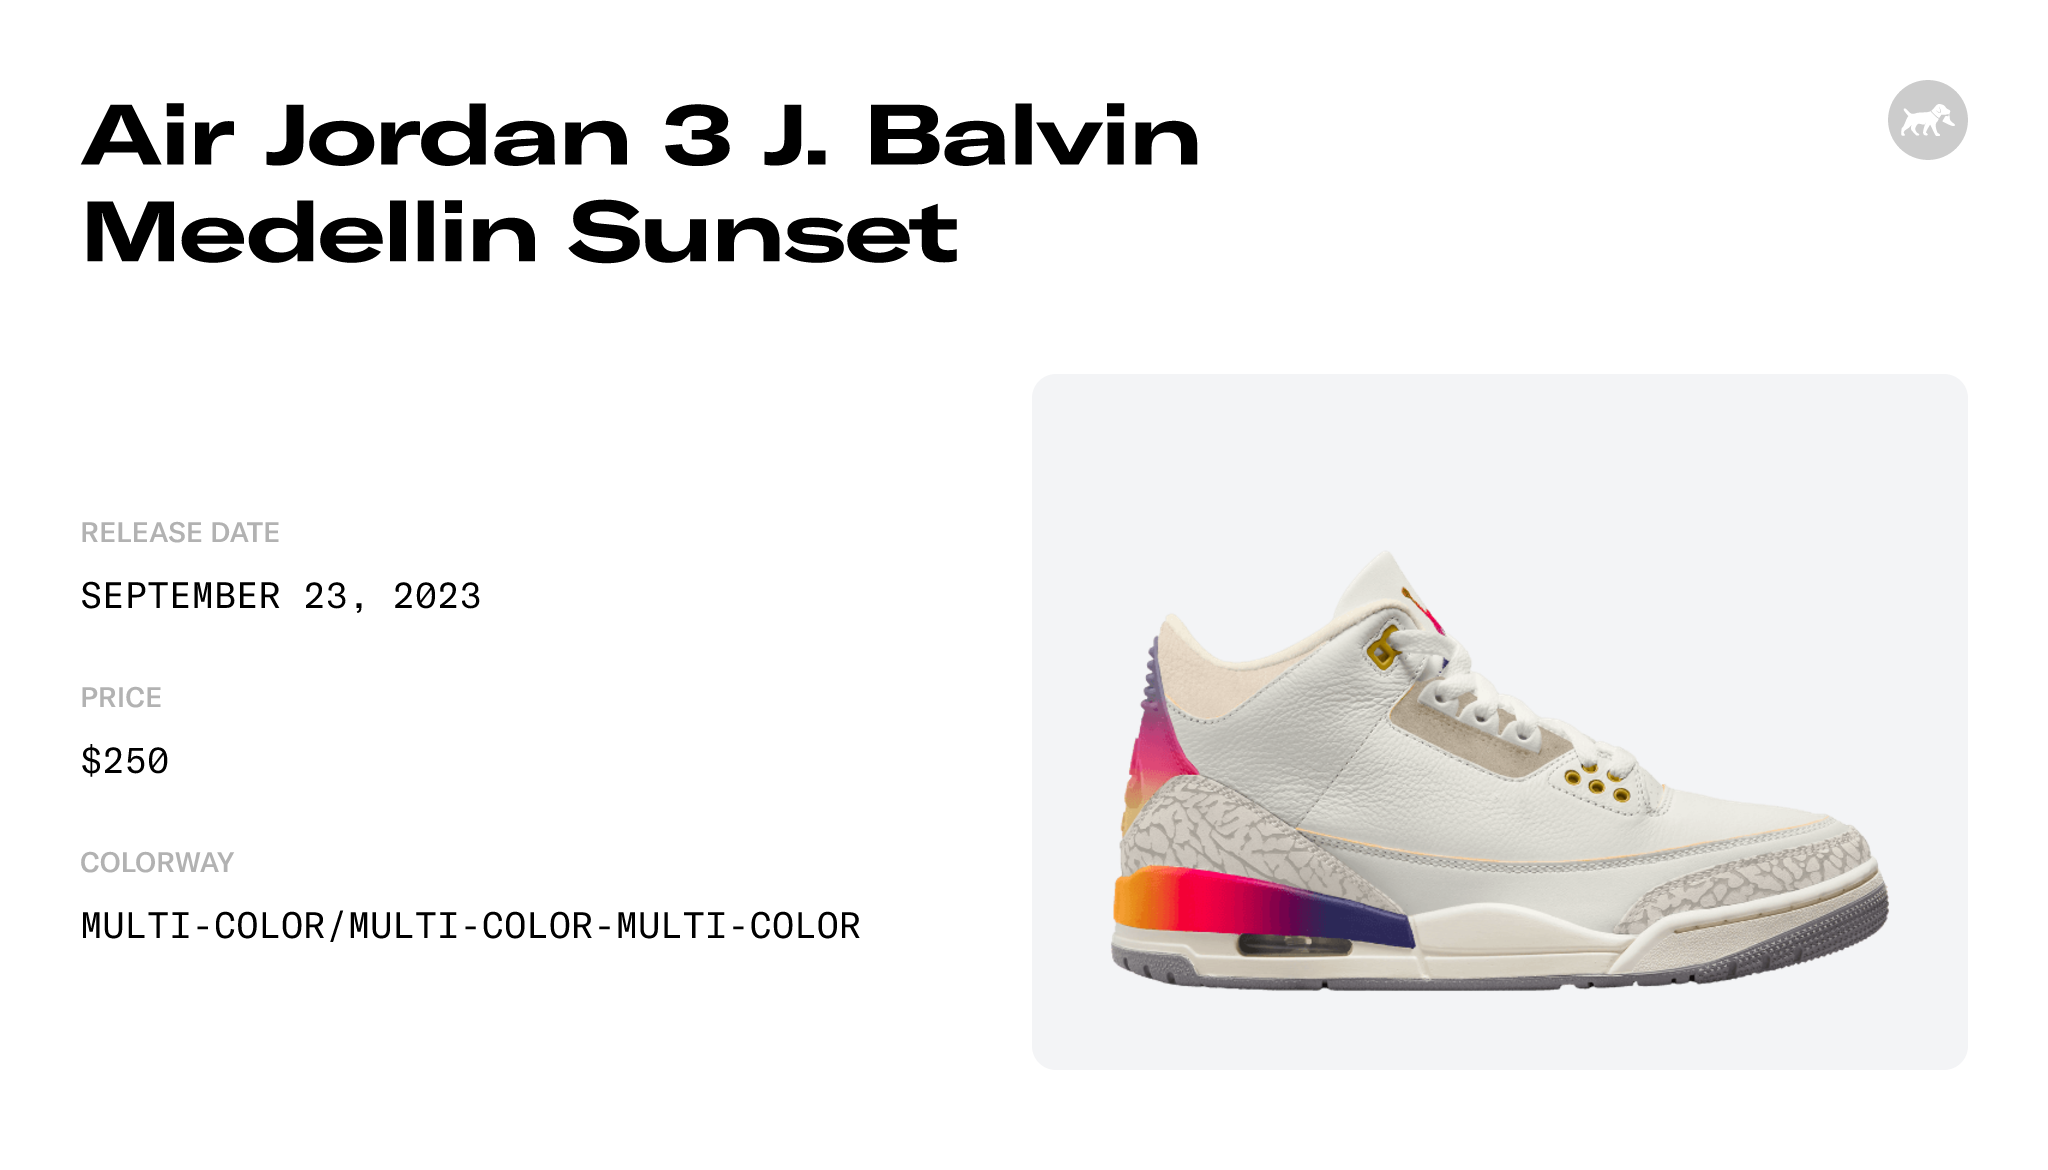 Air Jordan 3 J. Balvin Medellin Sunset (TD) Raffles and Release Date